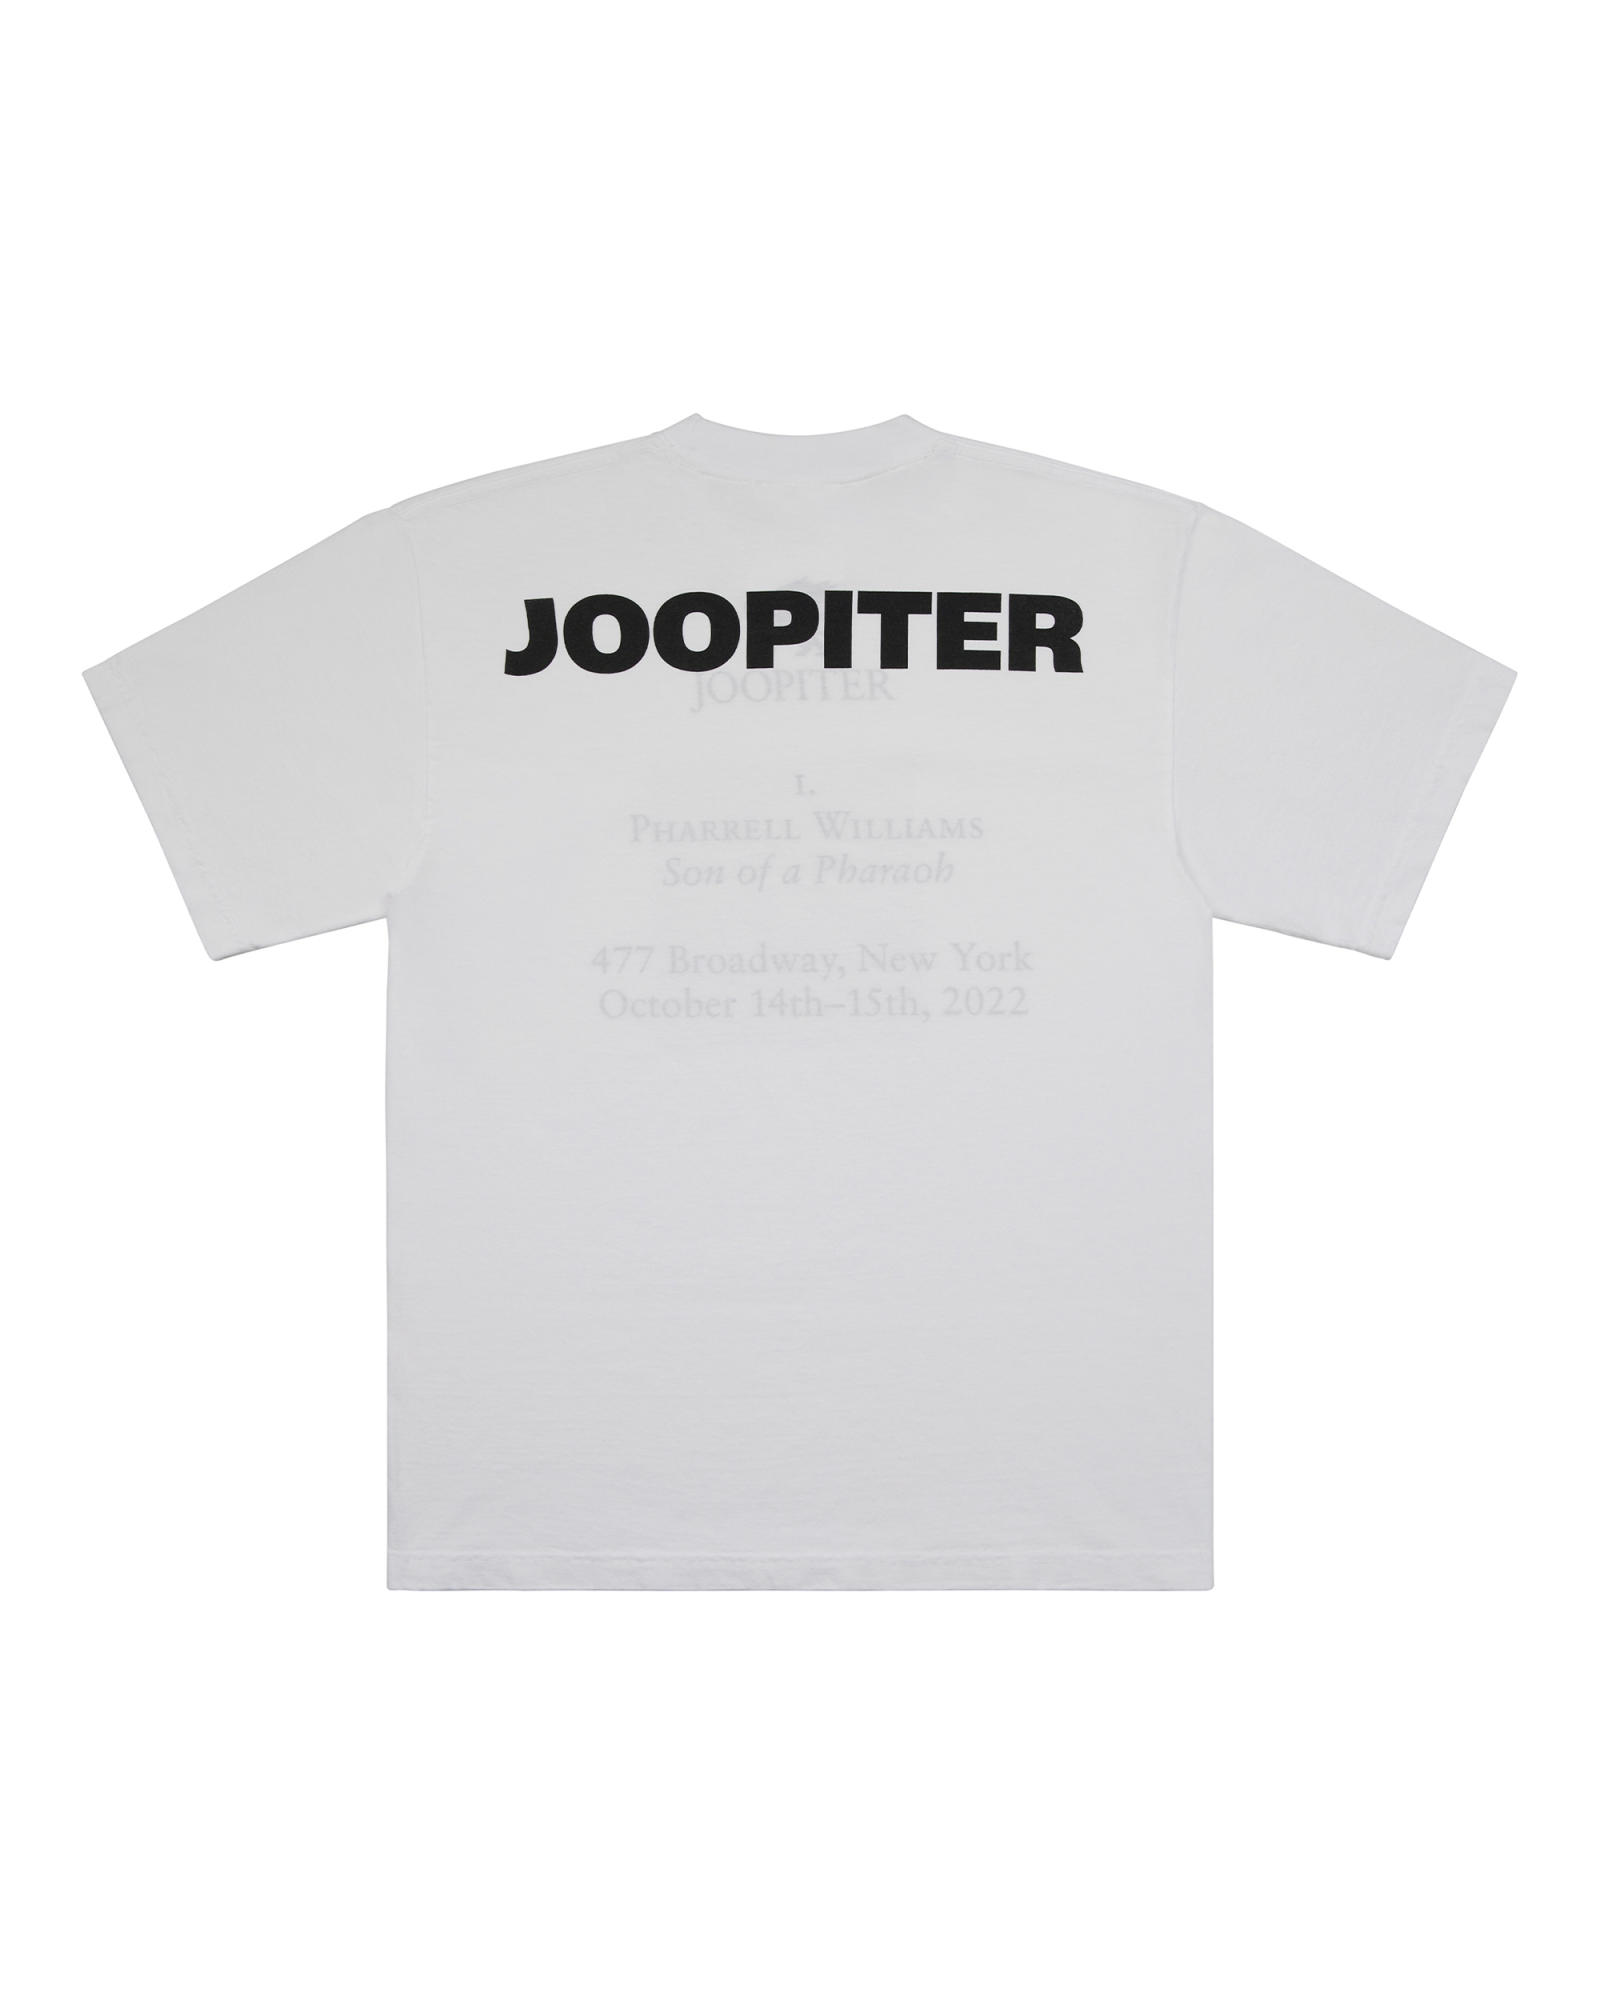 joopiter-ecomm-test